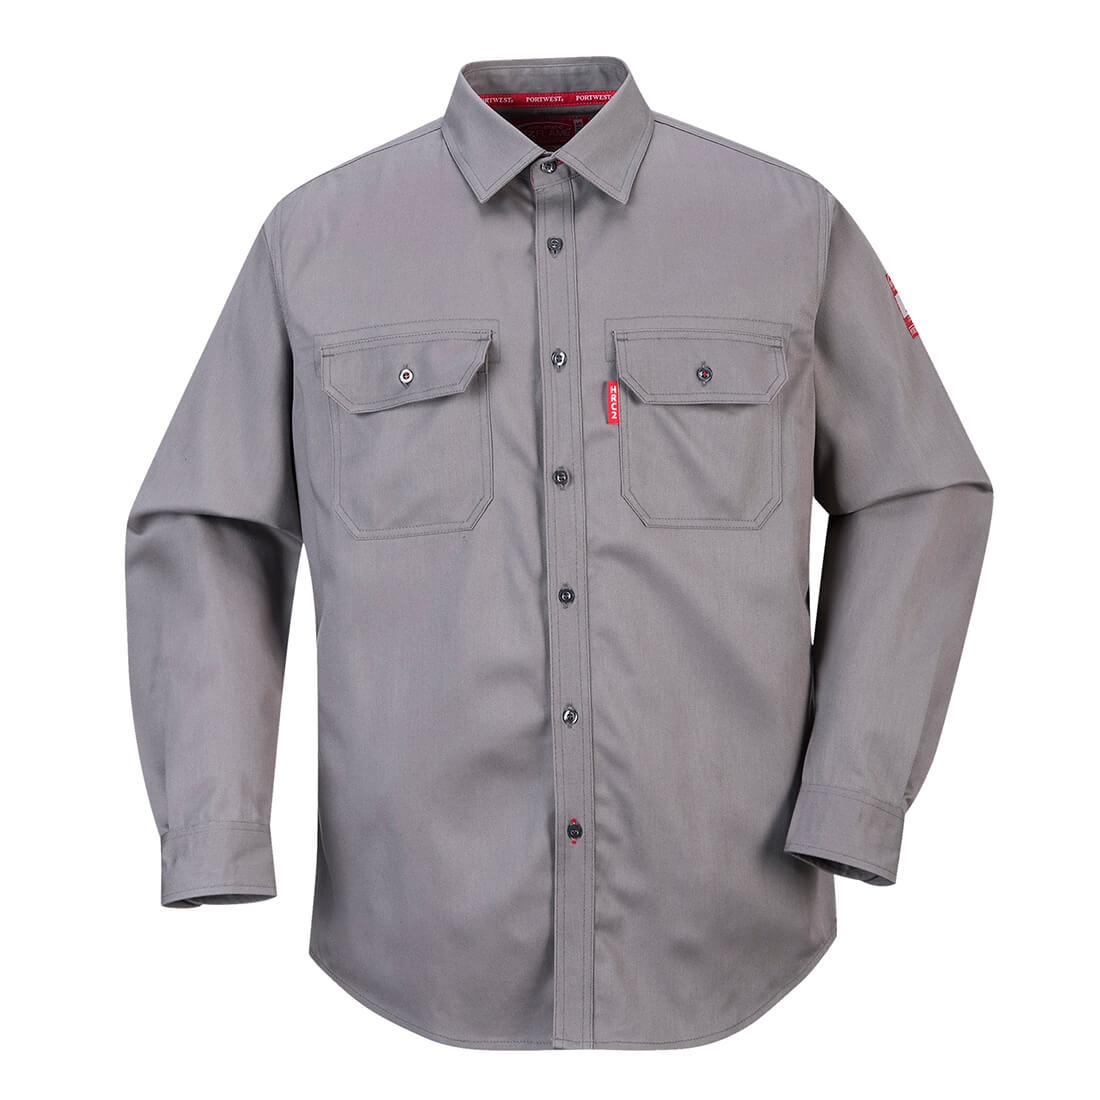 Image of Biz Flame Mens Flame Resistant Work Shirt Grey XL